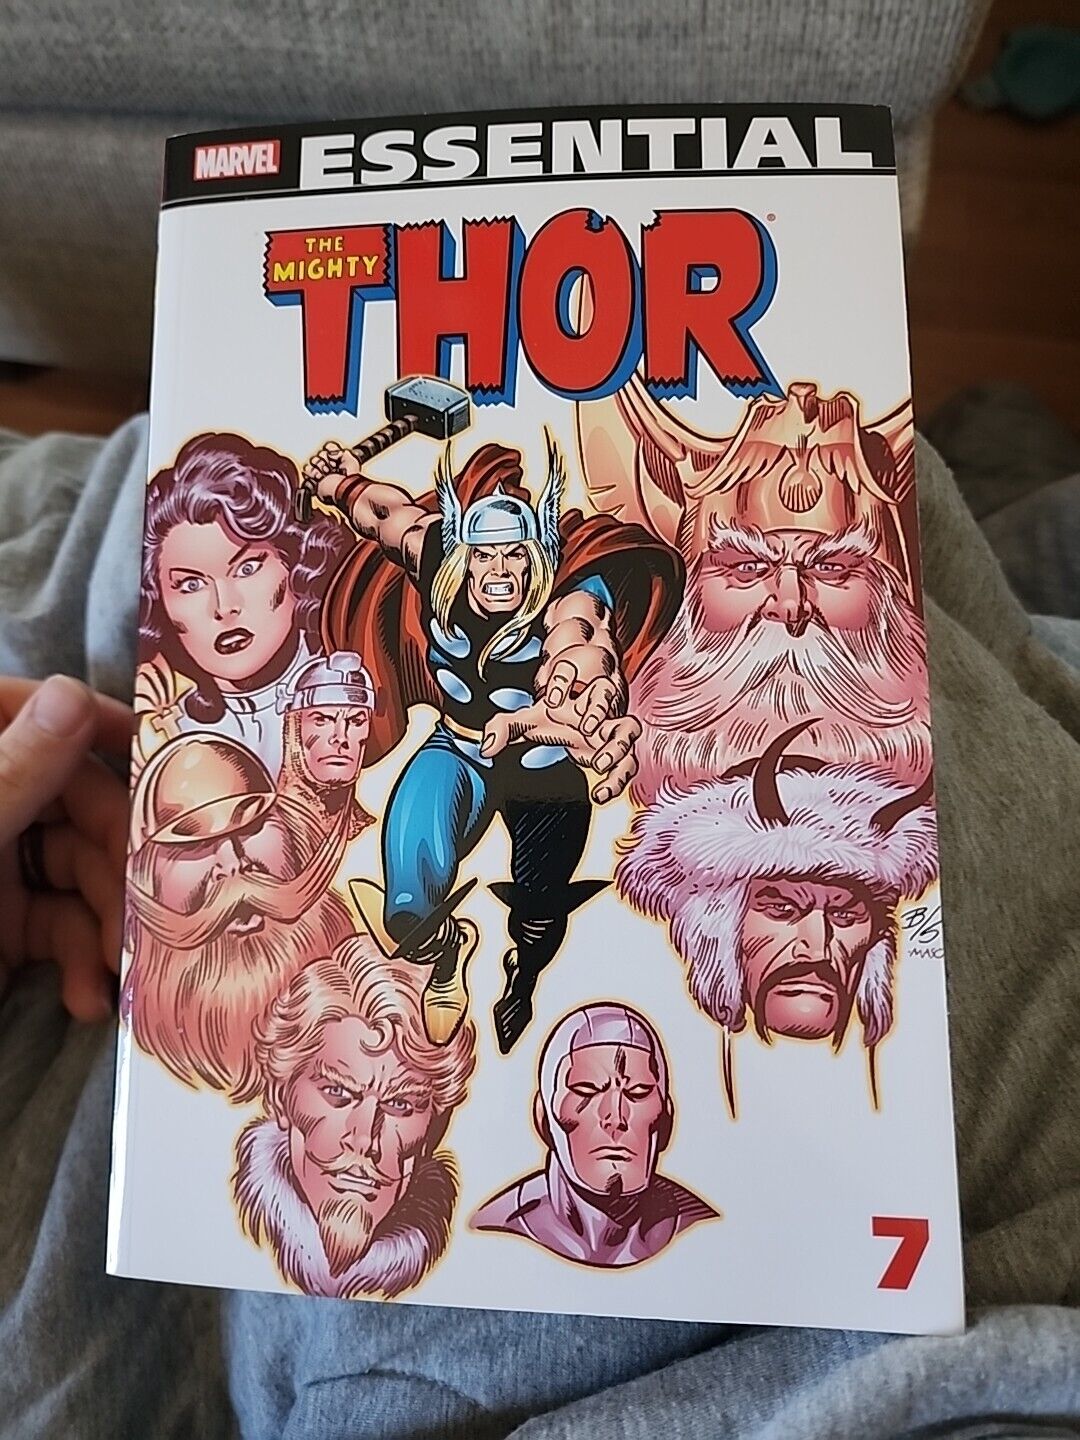 Essential Thor #7 (Marvel, October 2013)